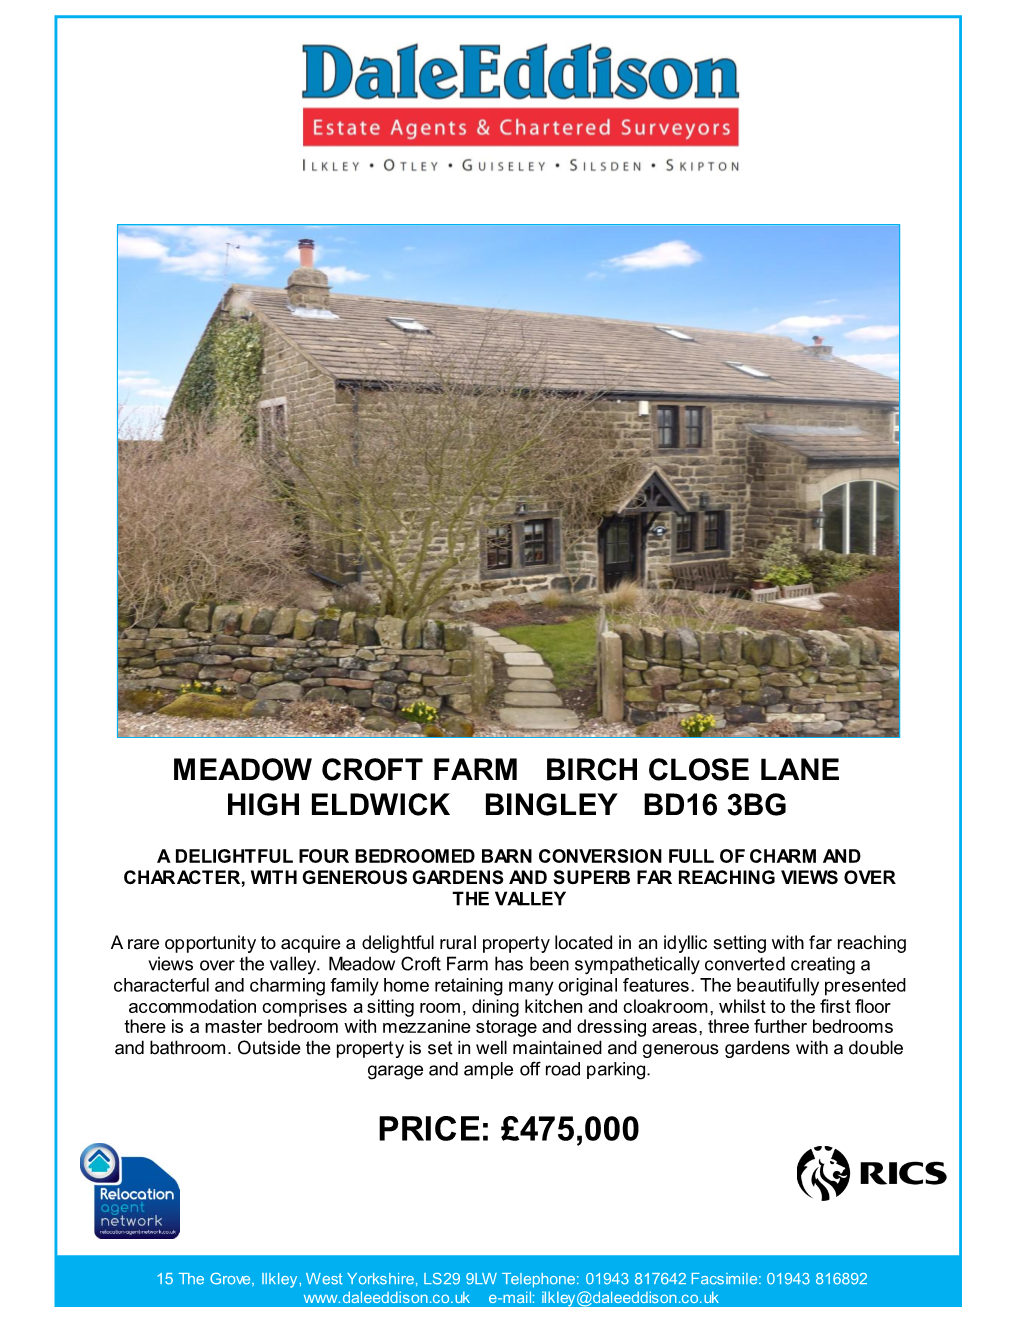 Meadow Croft Farm Birch Close Lane High Eldwick Bingley Bd16 3Bg